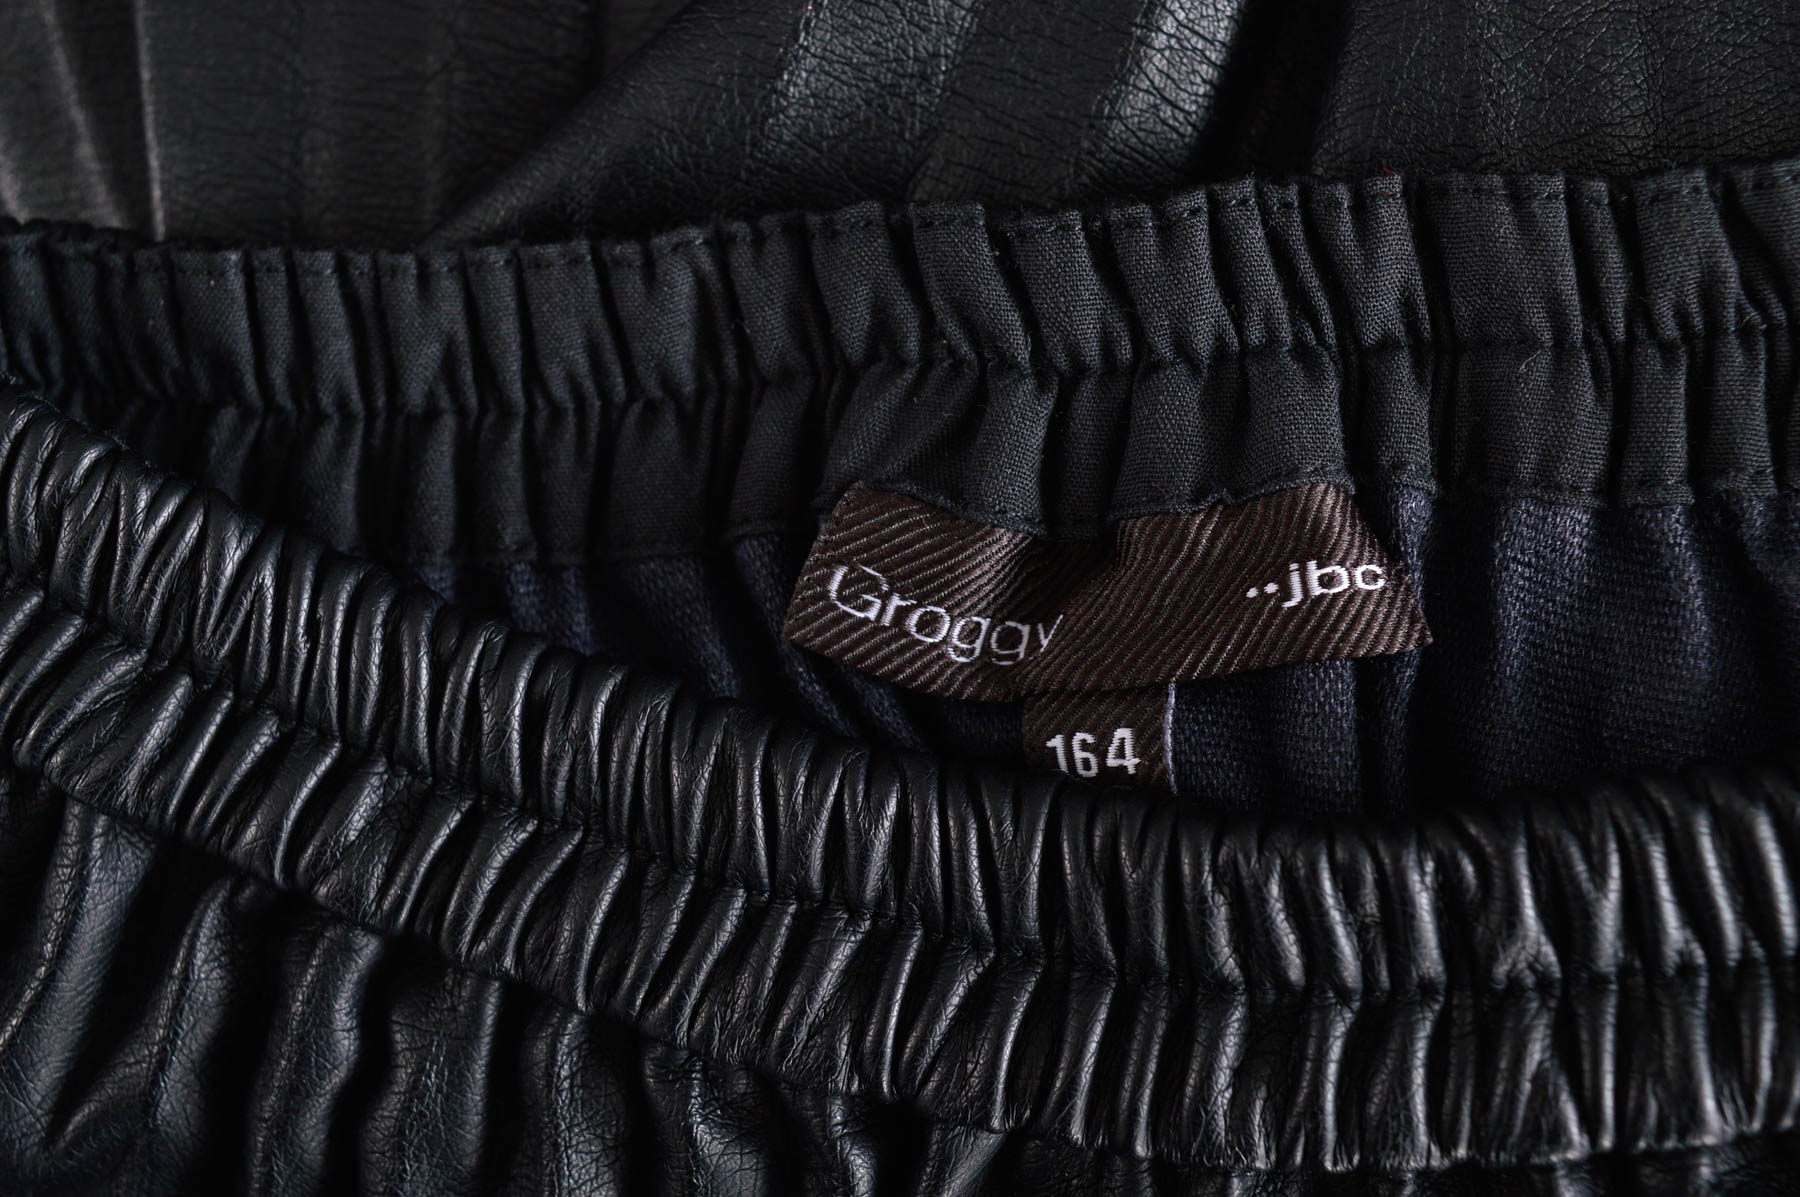 Leather skirt - Groggy by jbc - 2